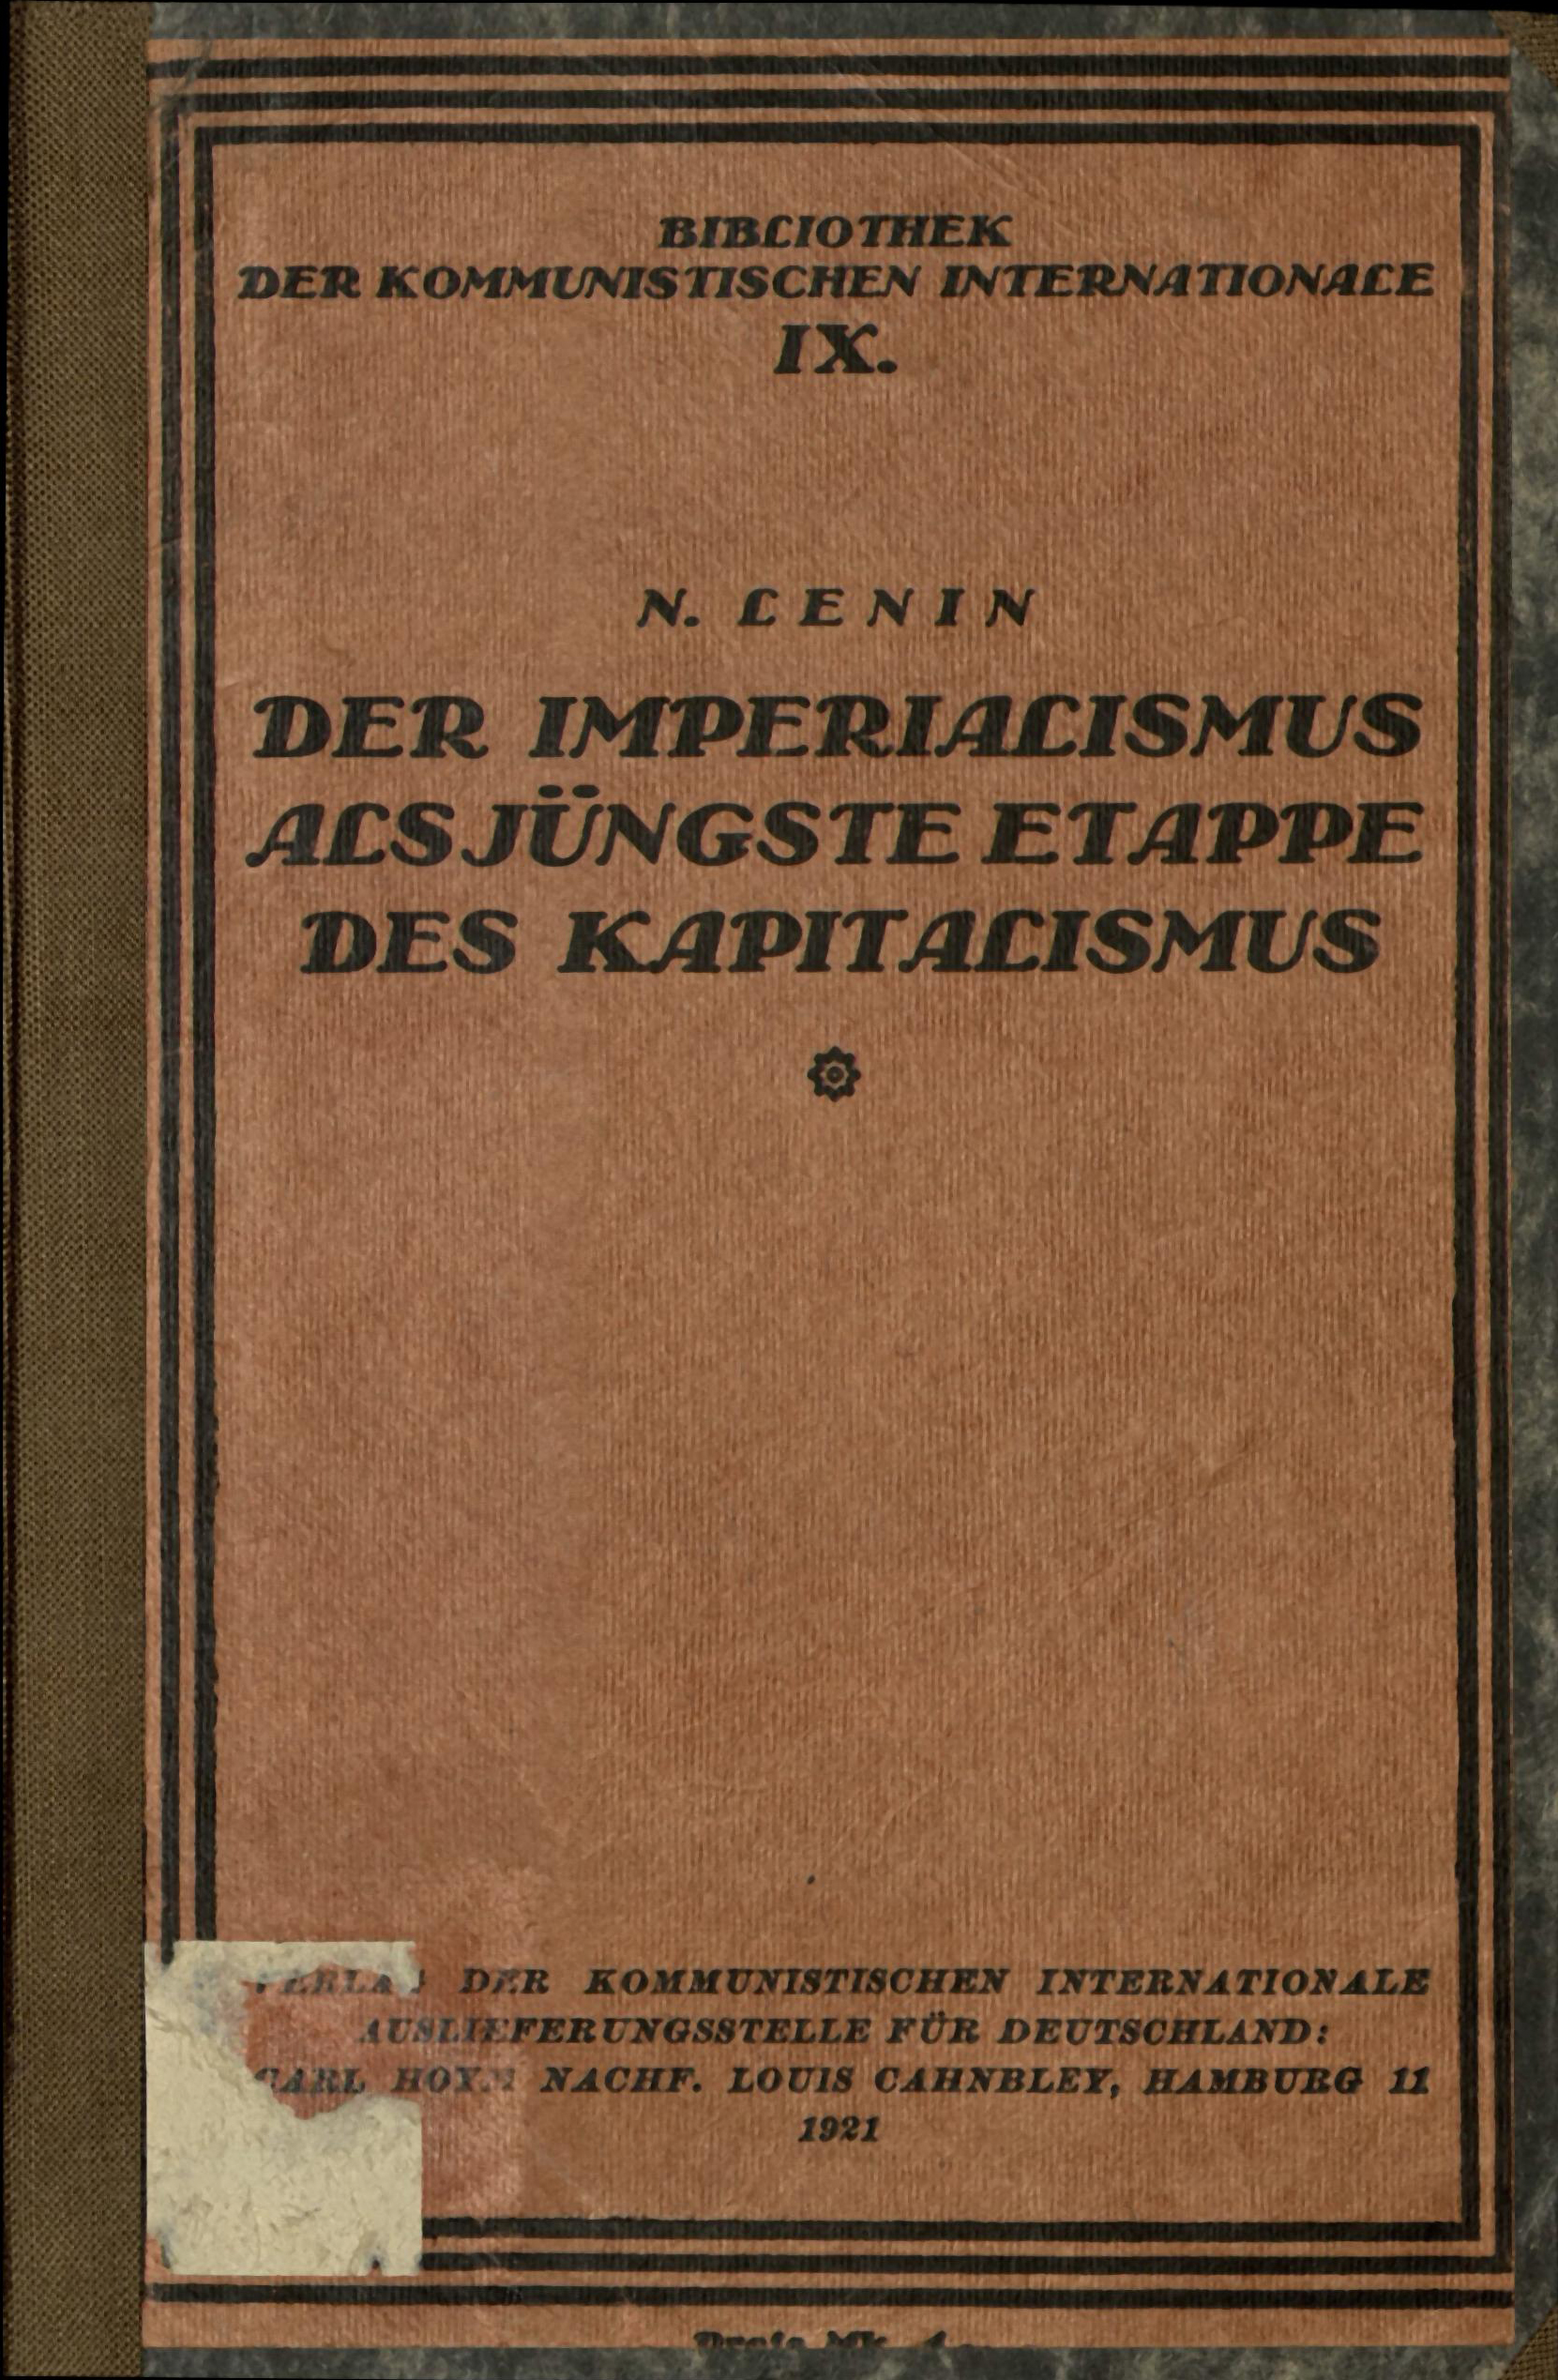 Wladimir I. Lenin, "Der Imperialismus als jüngste Etappe des Kapitalismus", Hamburg 1921